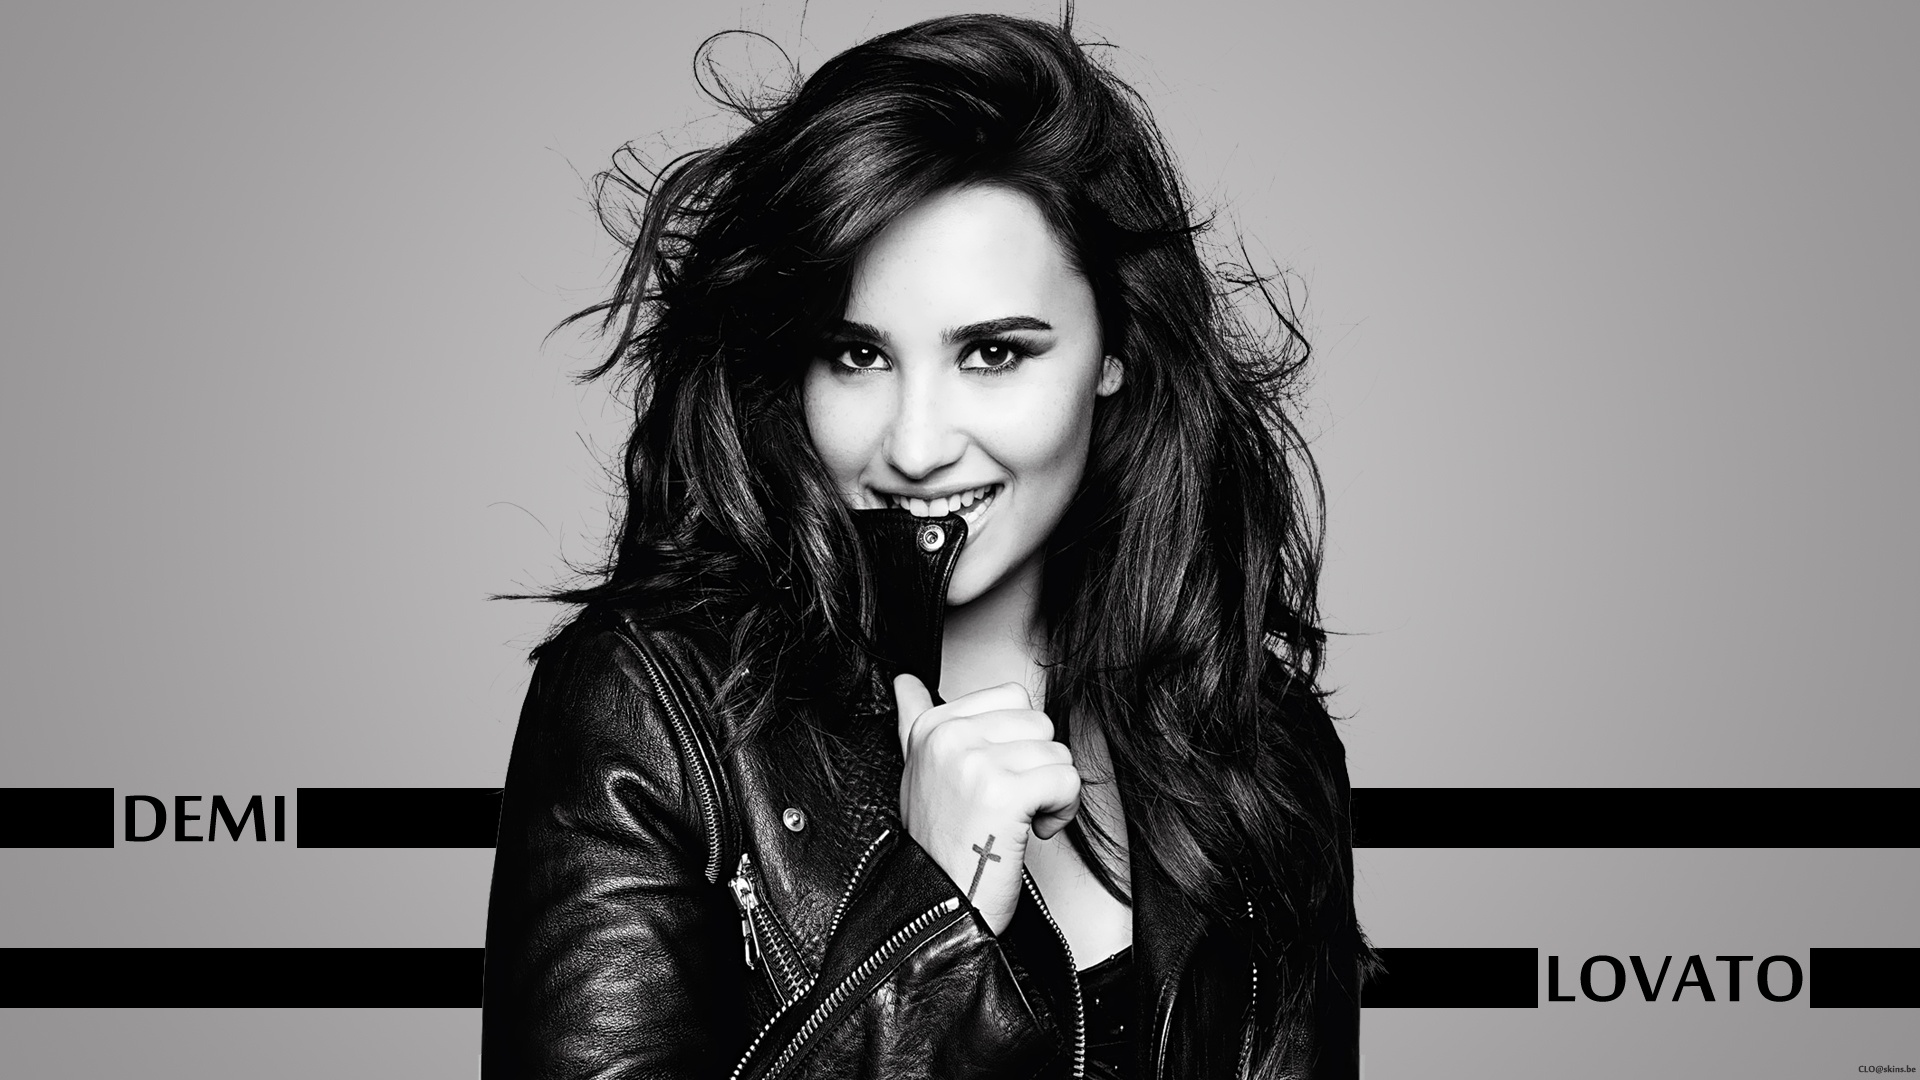 Free Download Demi Lovato Girlfriend 2013 Wallpaper 1920 X 1080 Wallpaper Hd [1920x1080] For